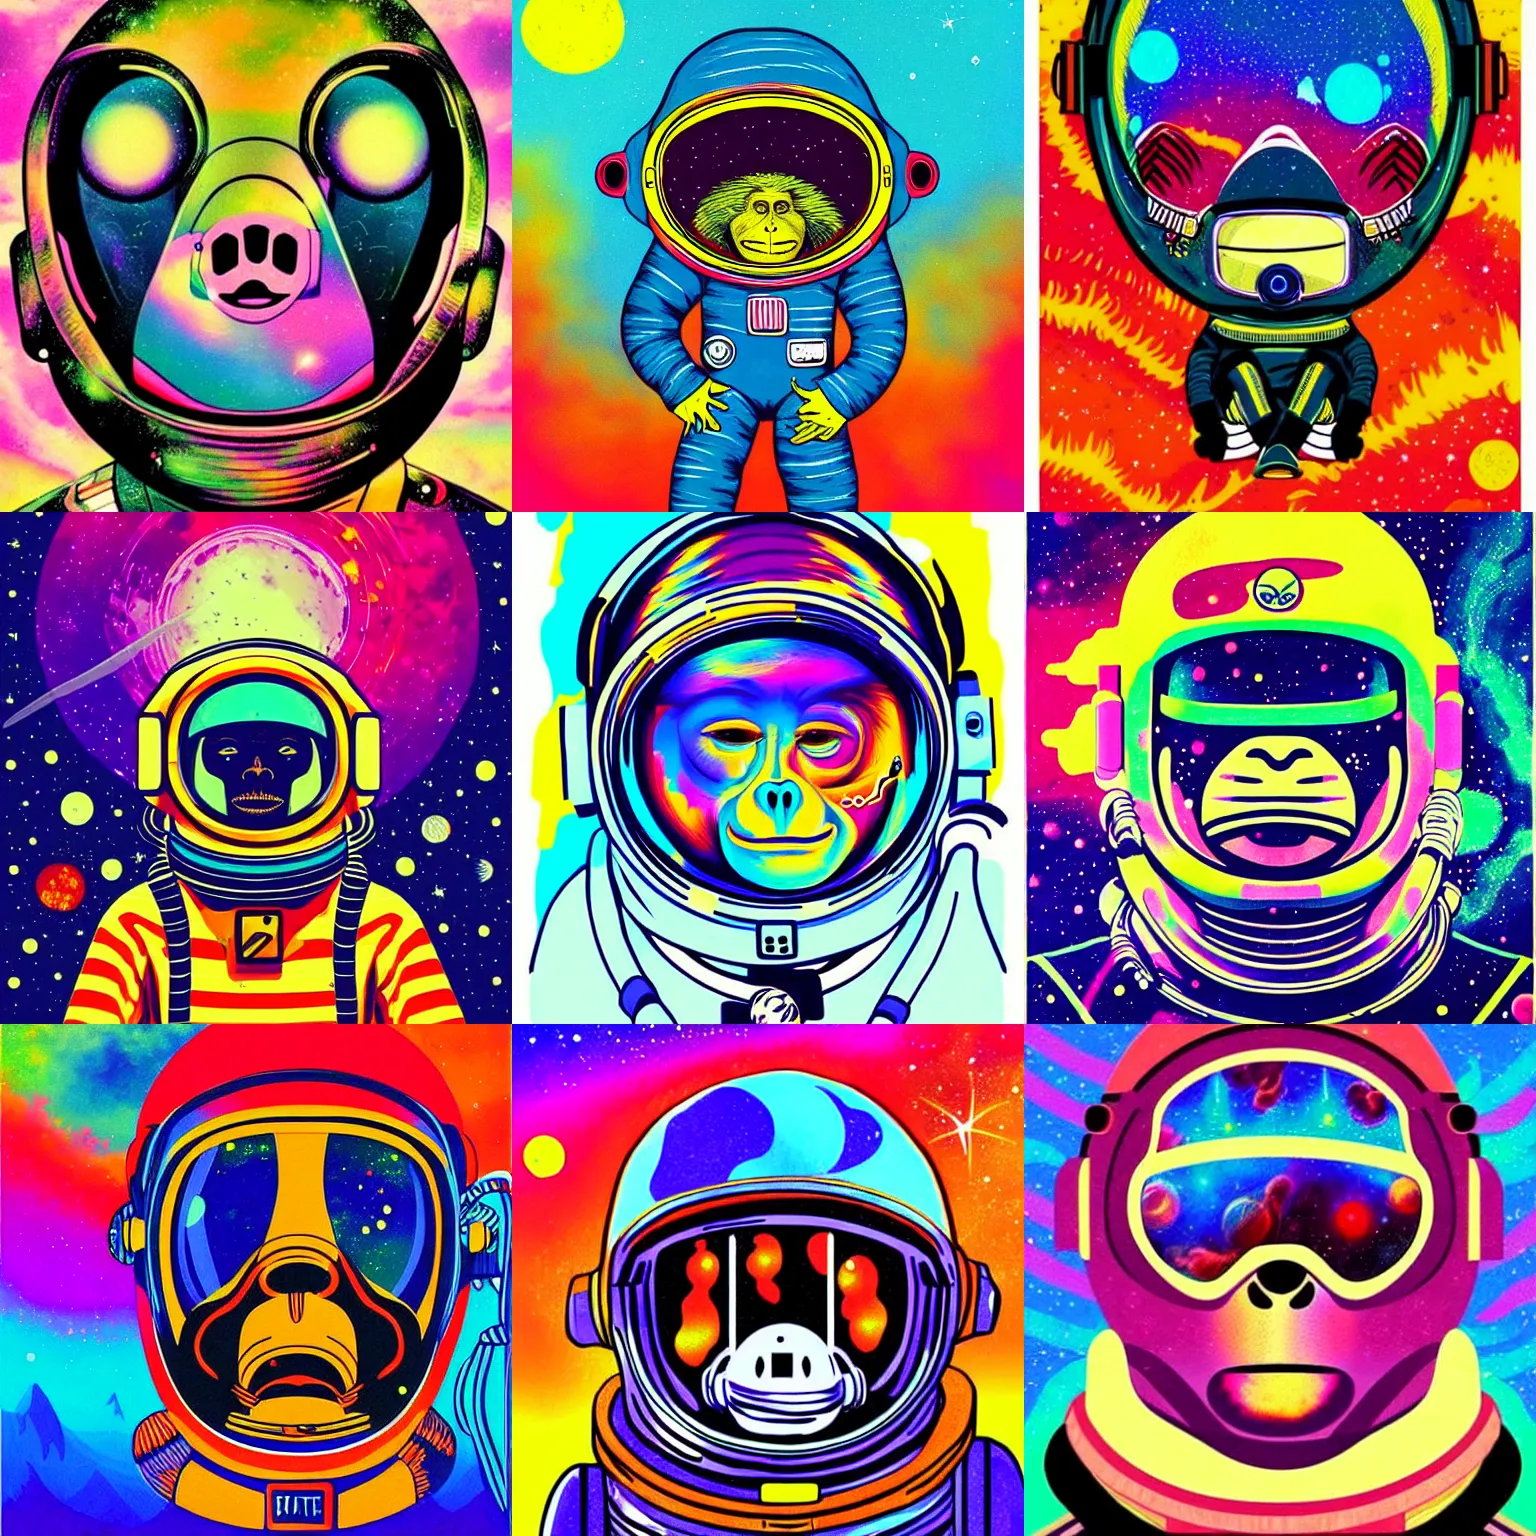 Prompt: Ape astronaut, beautiful colors, psychedelic art